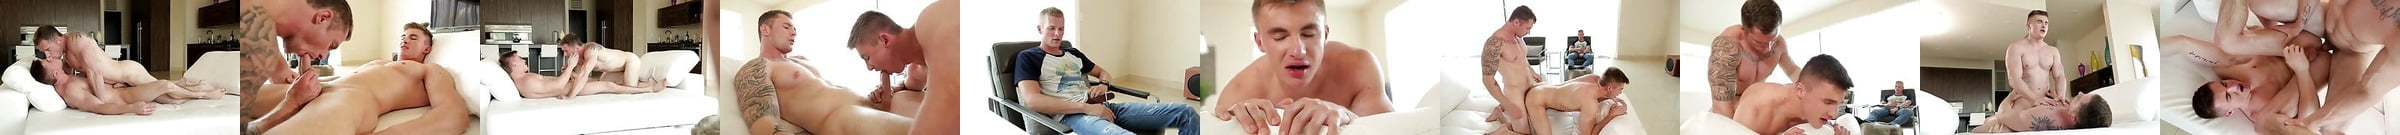 Gay Sex Sean Cody Gay Stars Bareback Porn C0 Xhamster